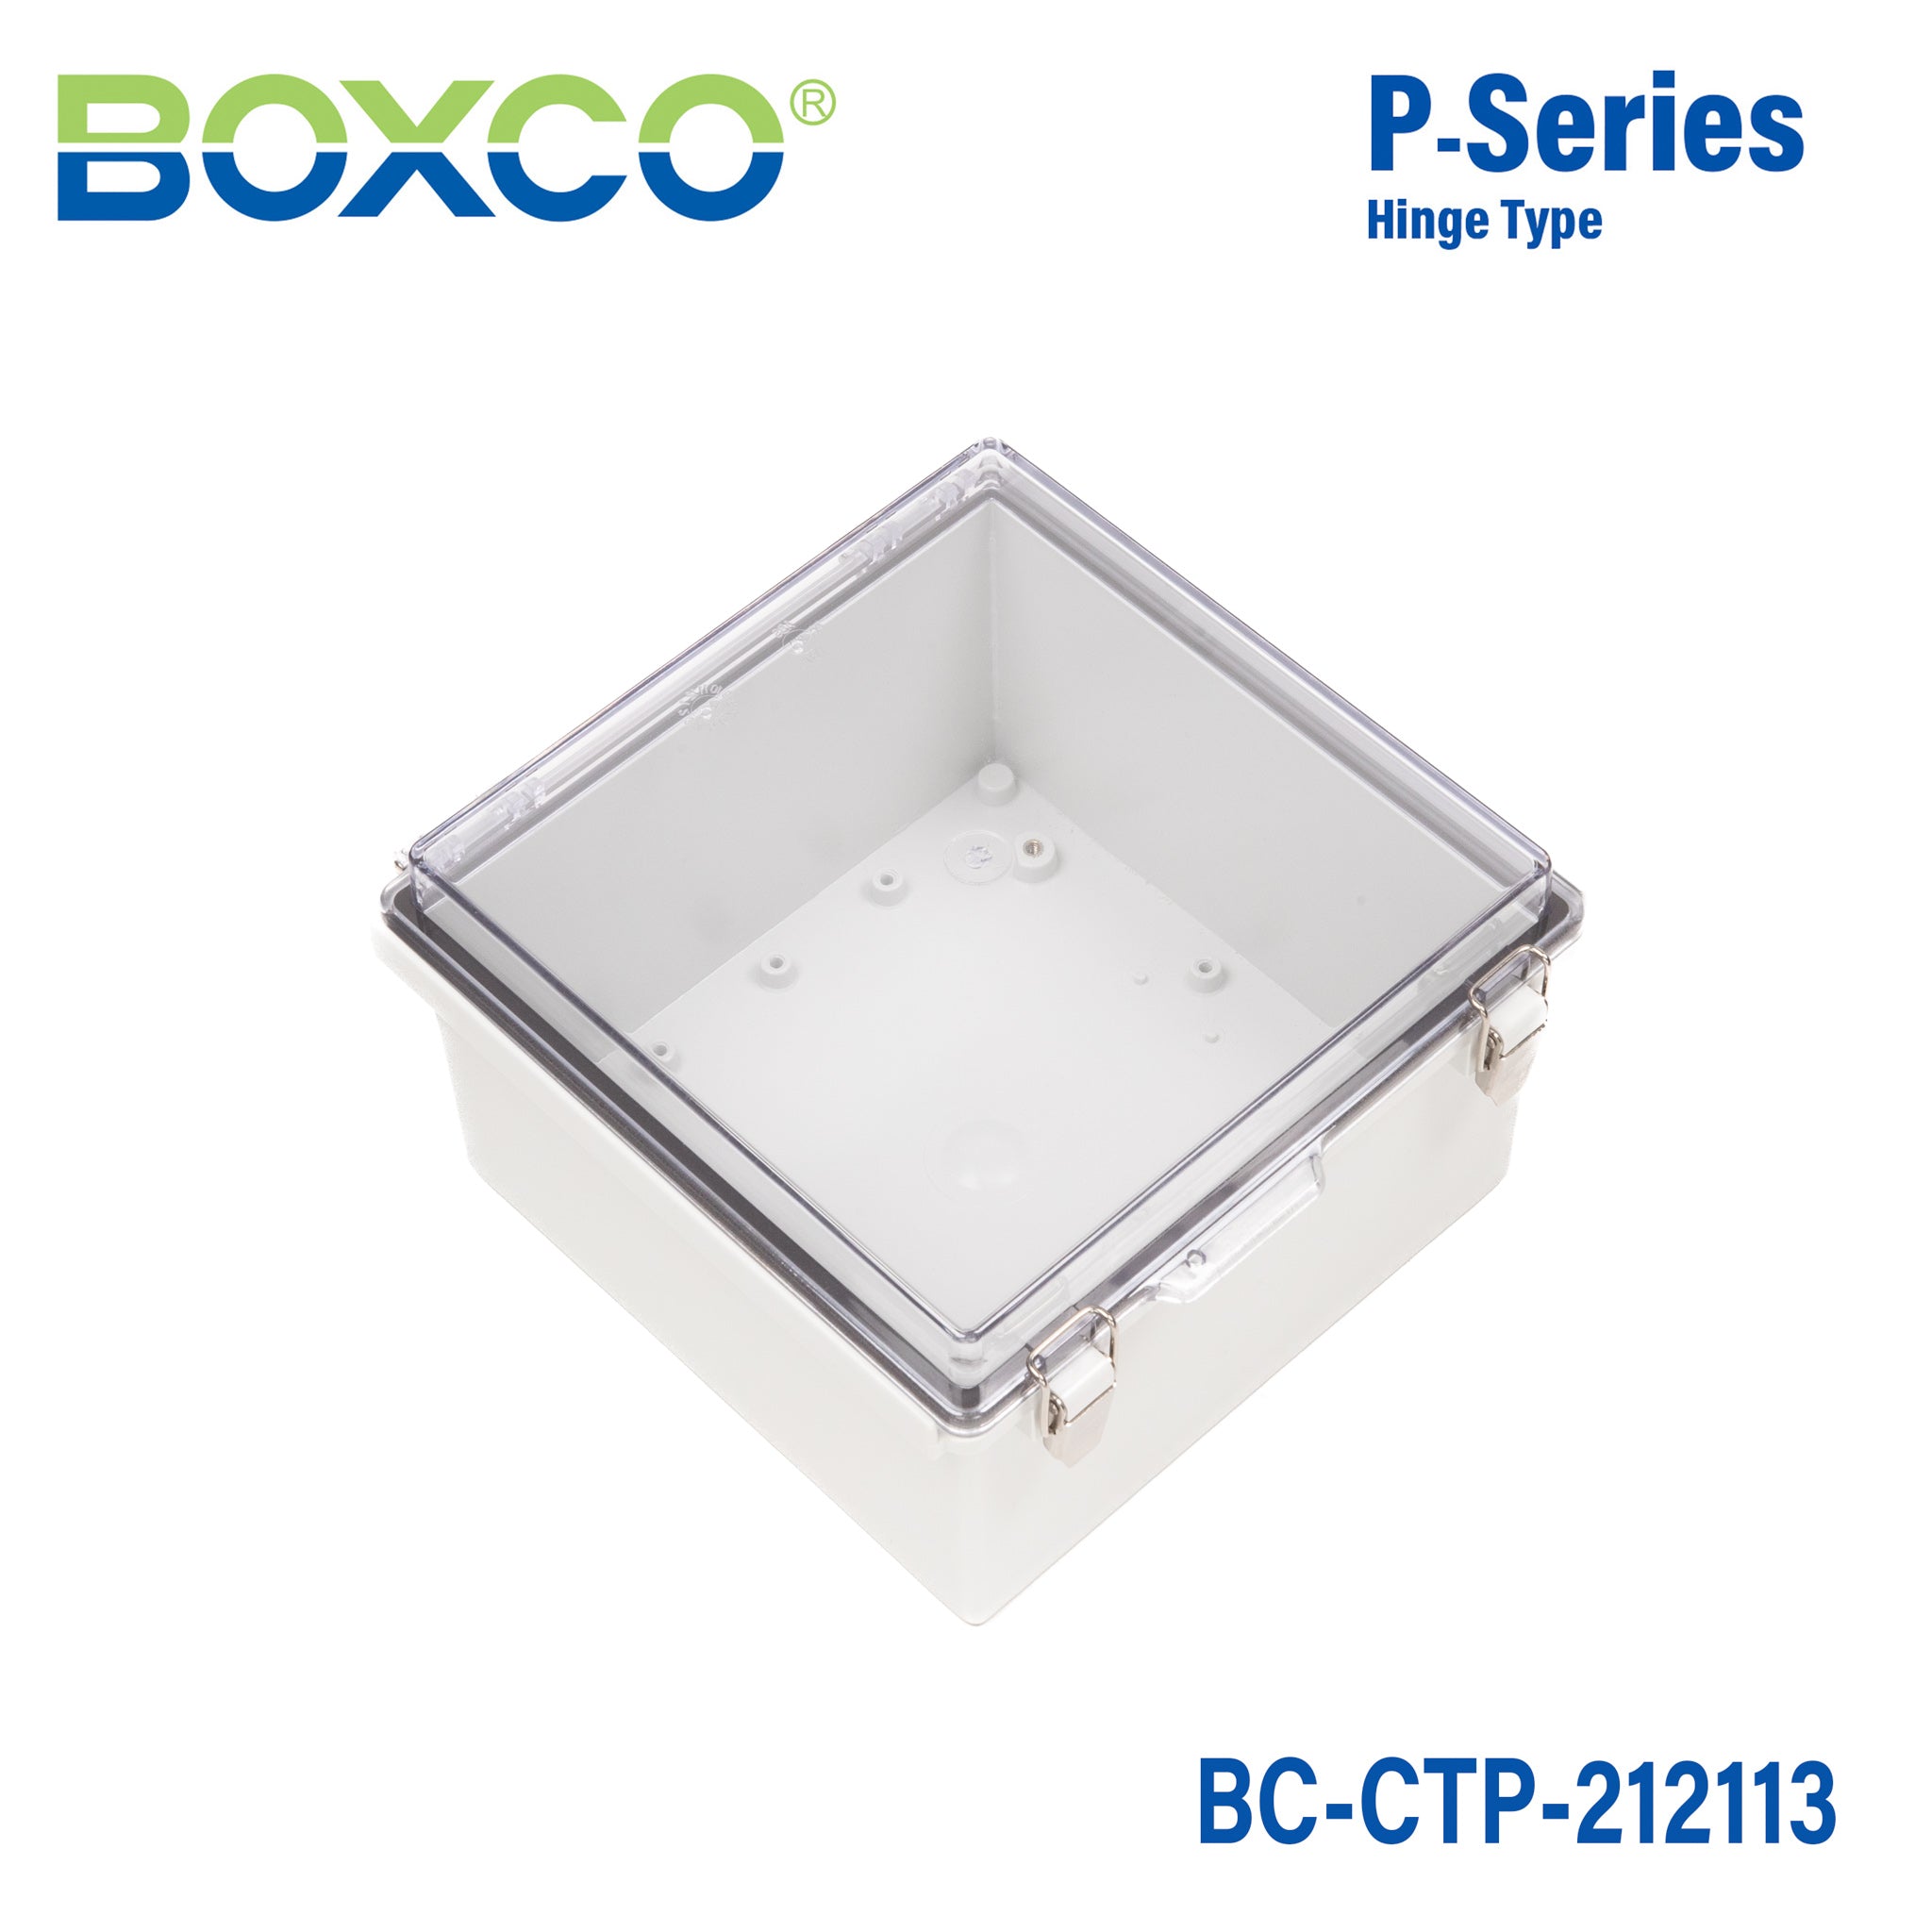 Boxco P Series BC-CTP-212113 Enclosure Box